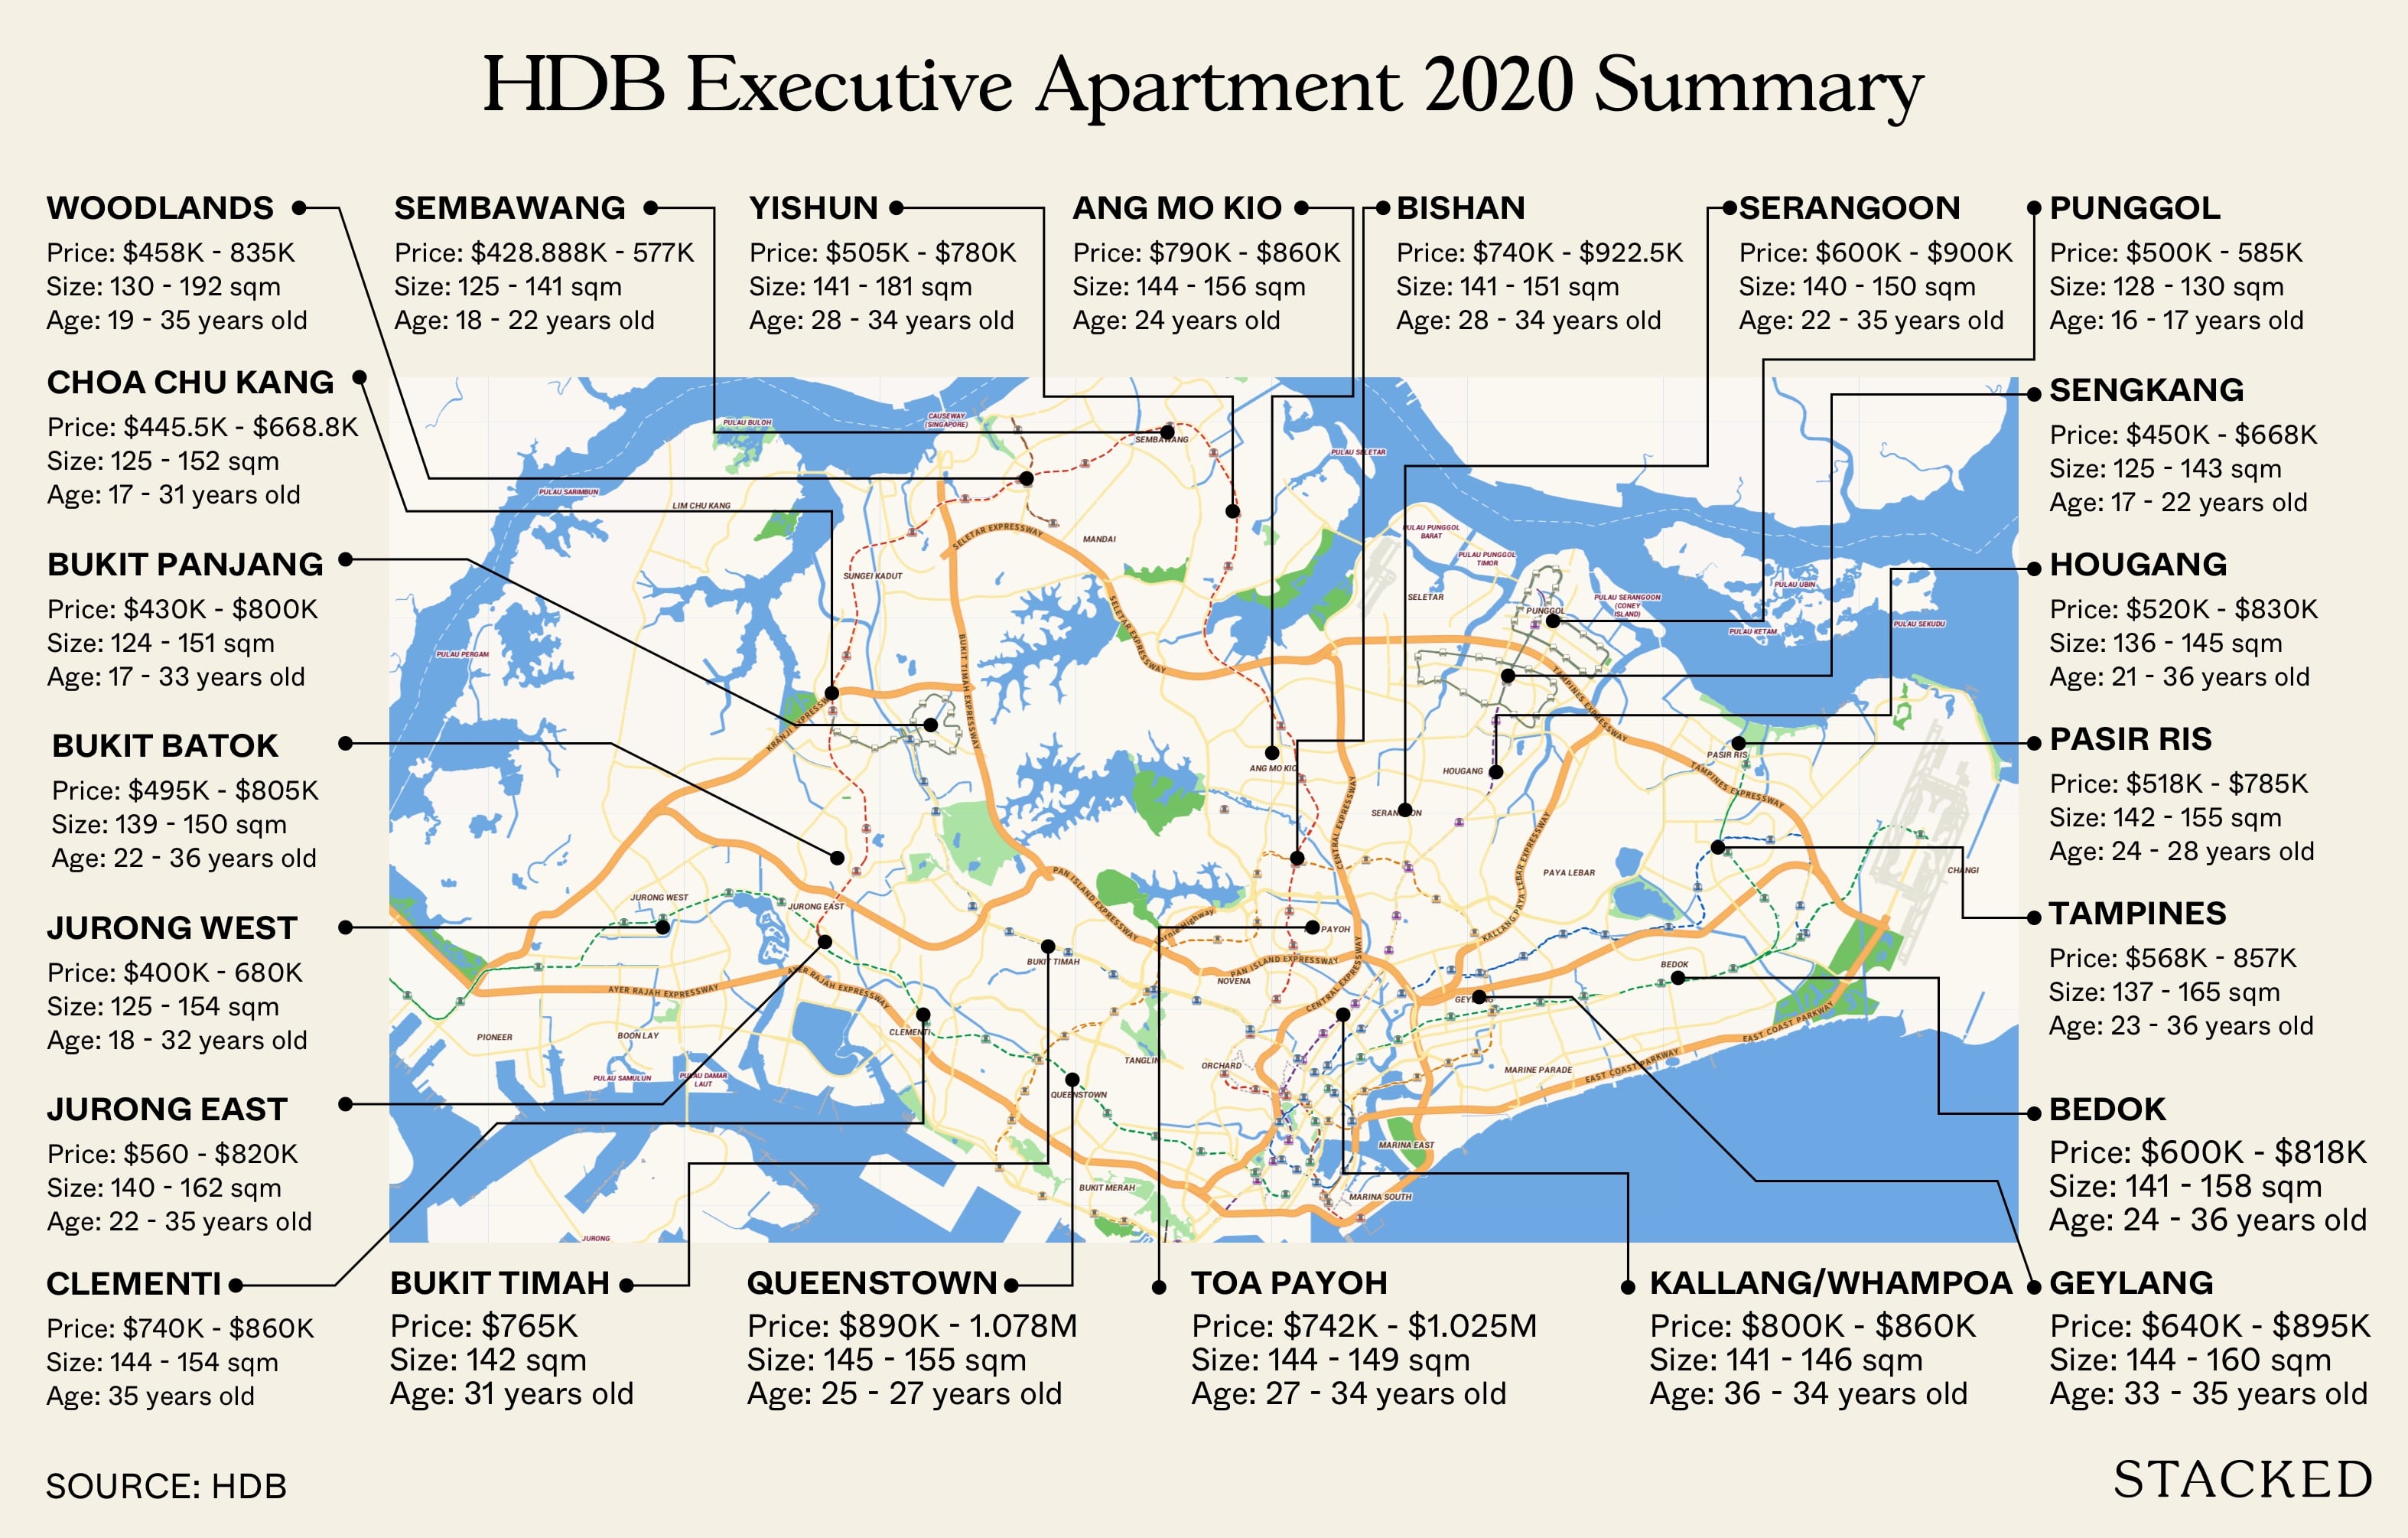 HDB executive apartment locations